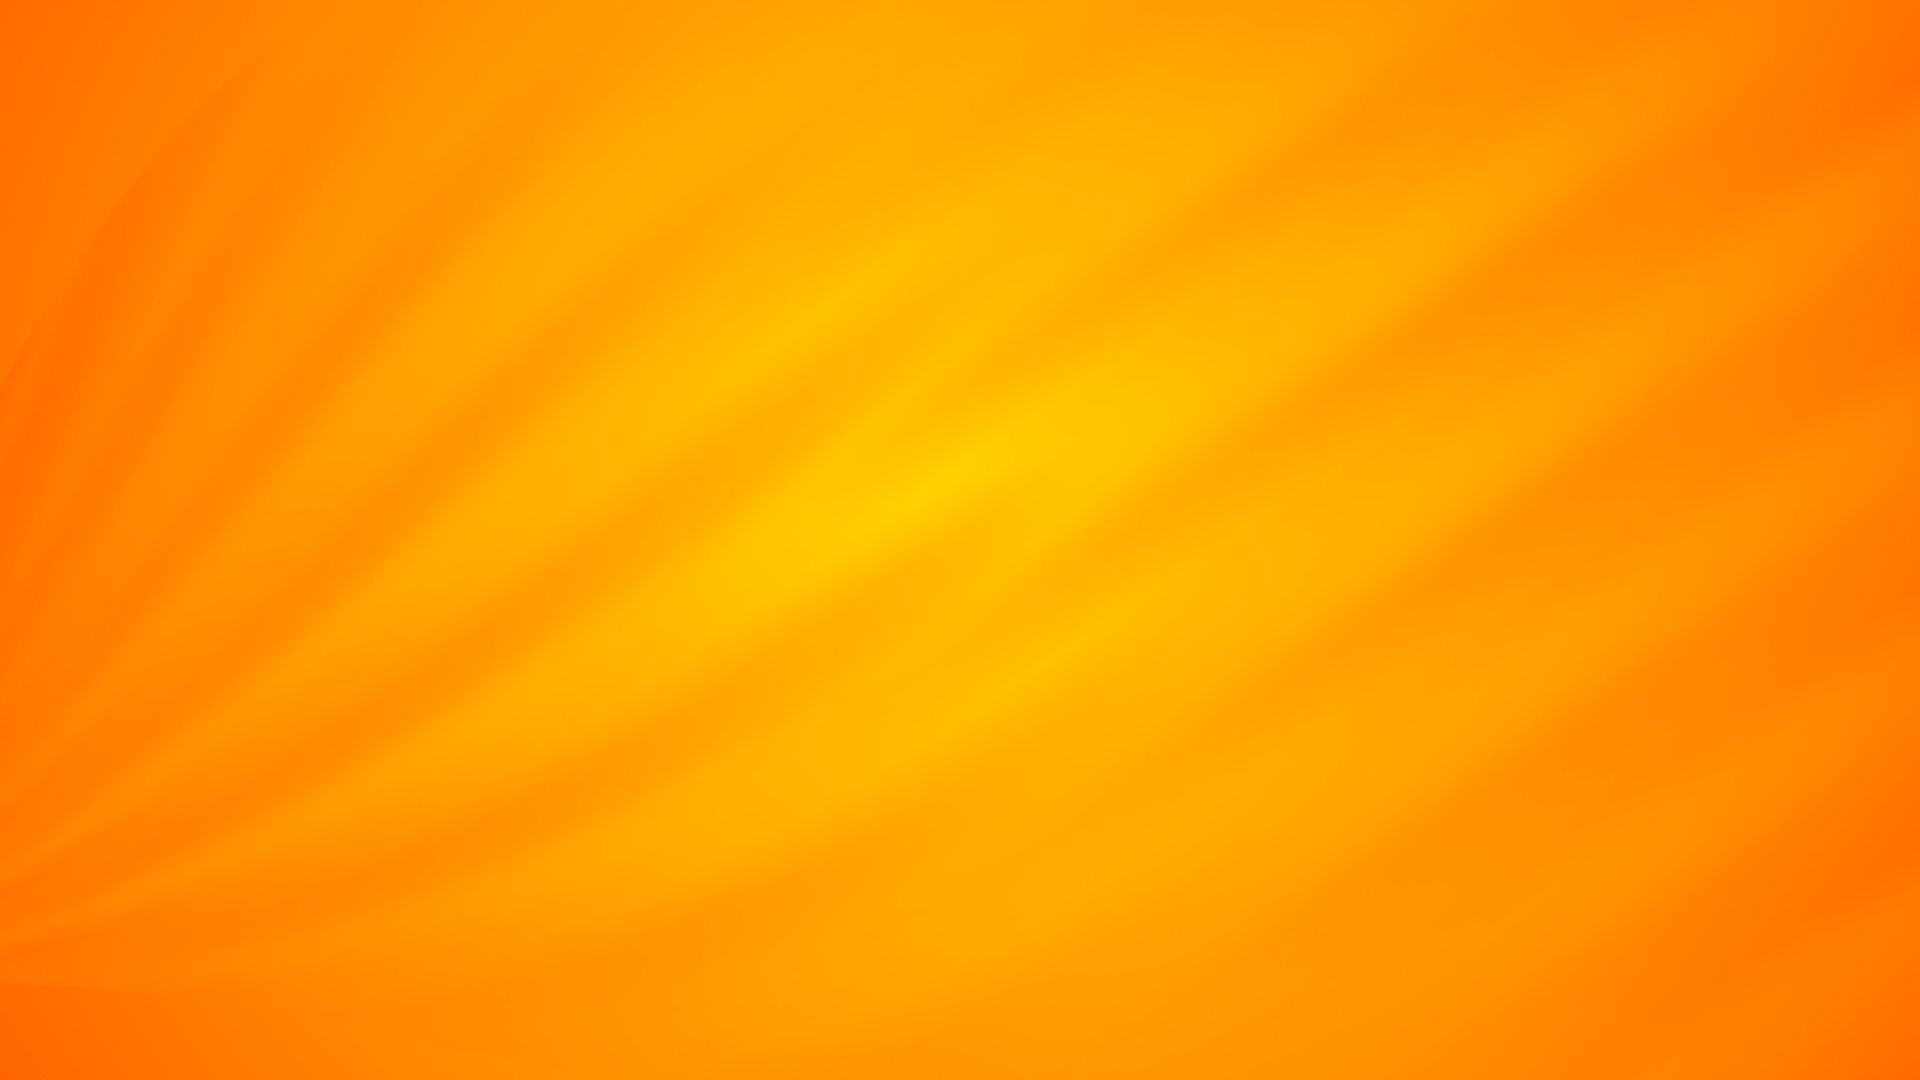 Wallpaper Orange and Yellow Light Digital Wallpaper Background  Download  Free Image